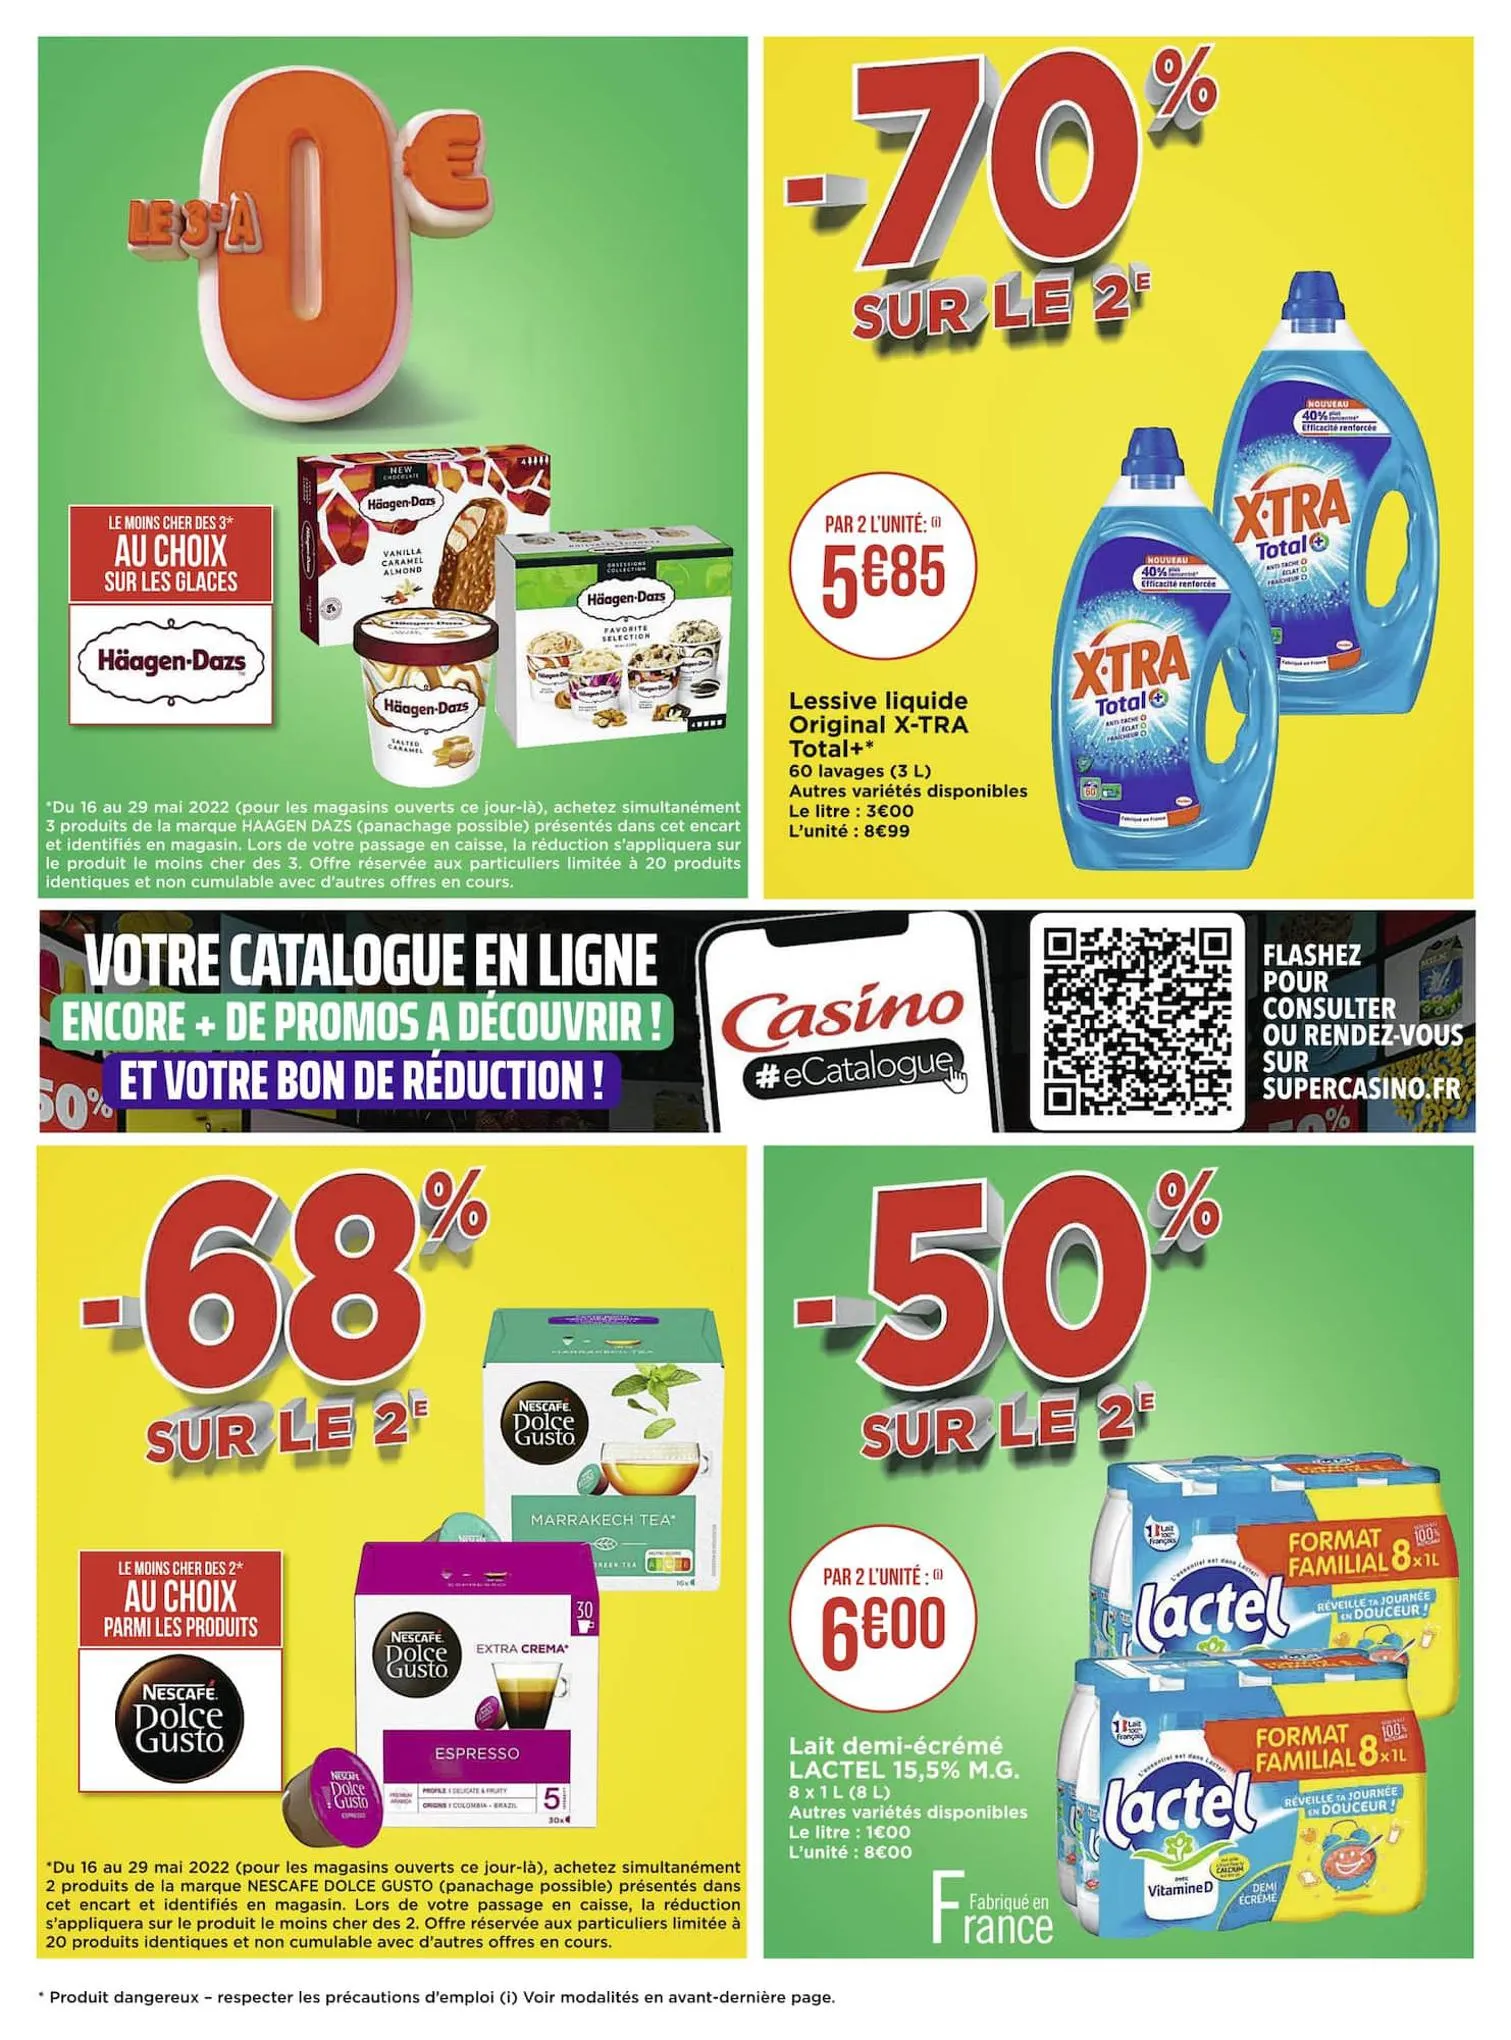 Catalogue Le mois Casinomania, page 00003